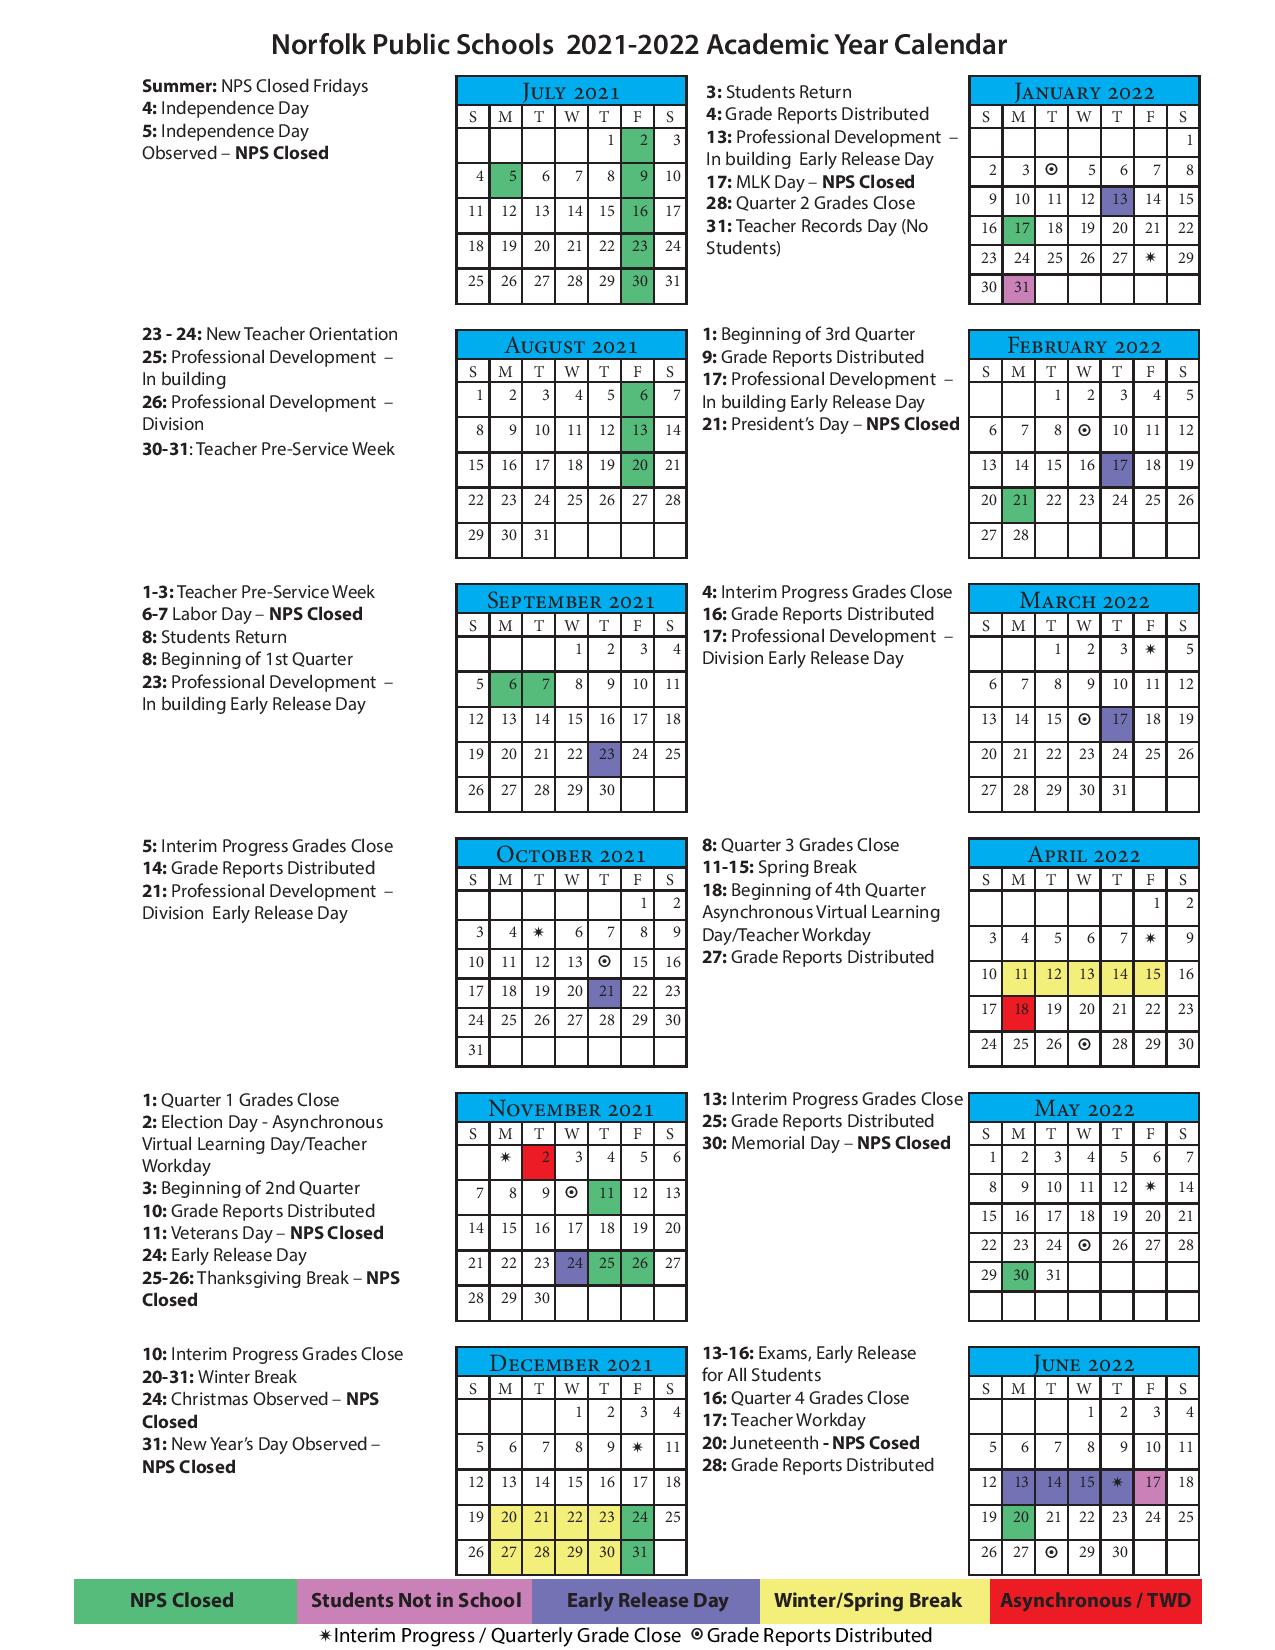 Norfolk Public Schools Calendar 20212022 in PDF